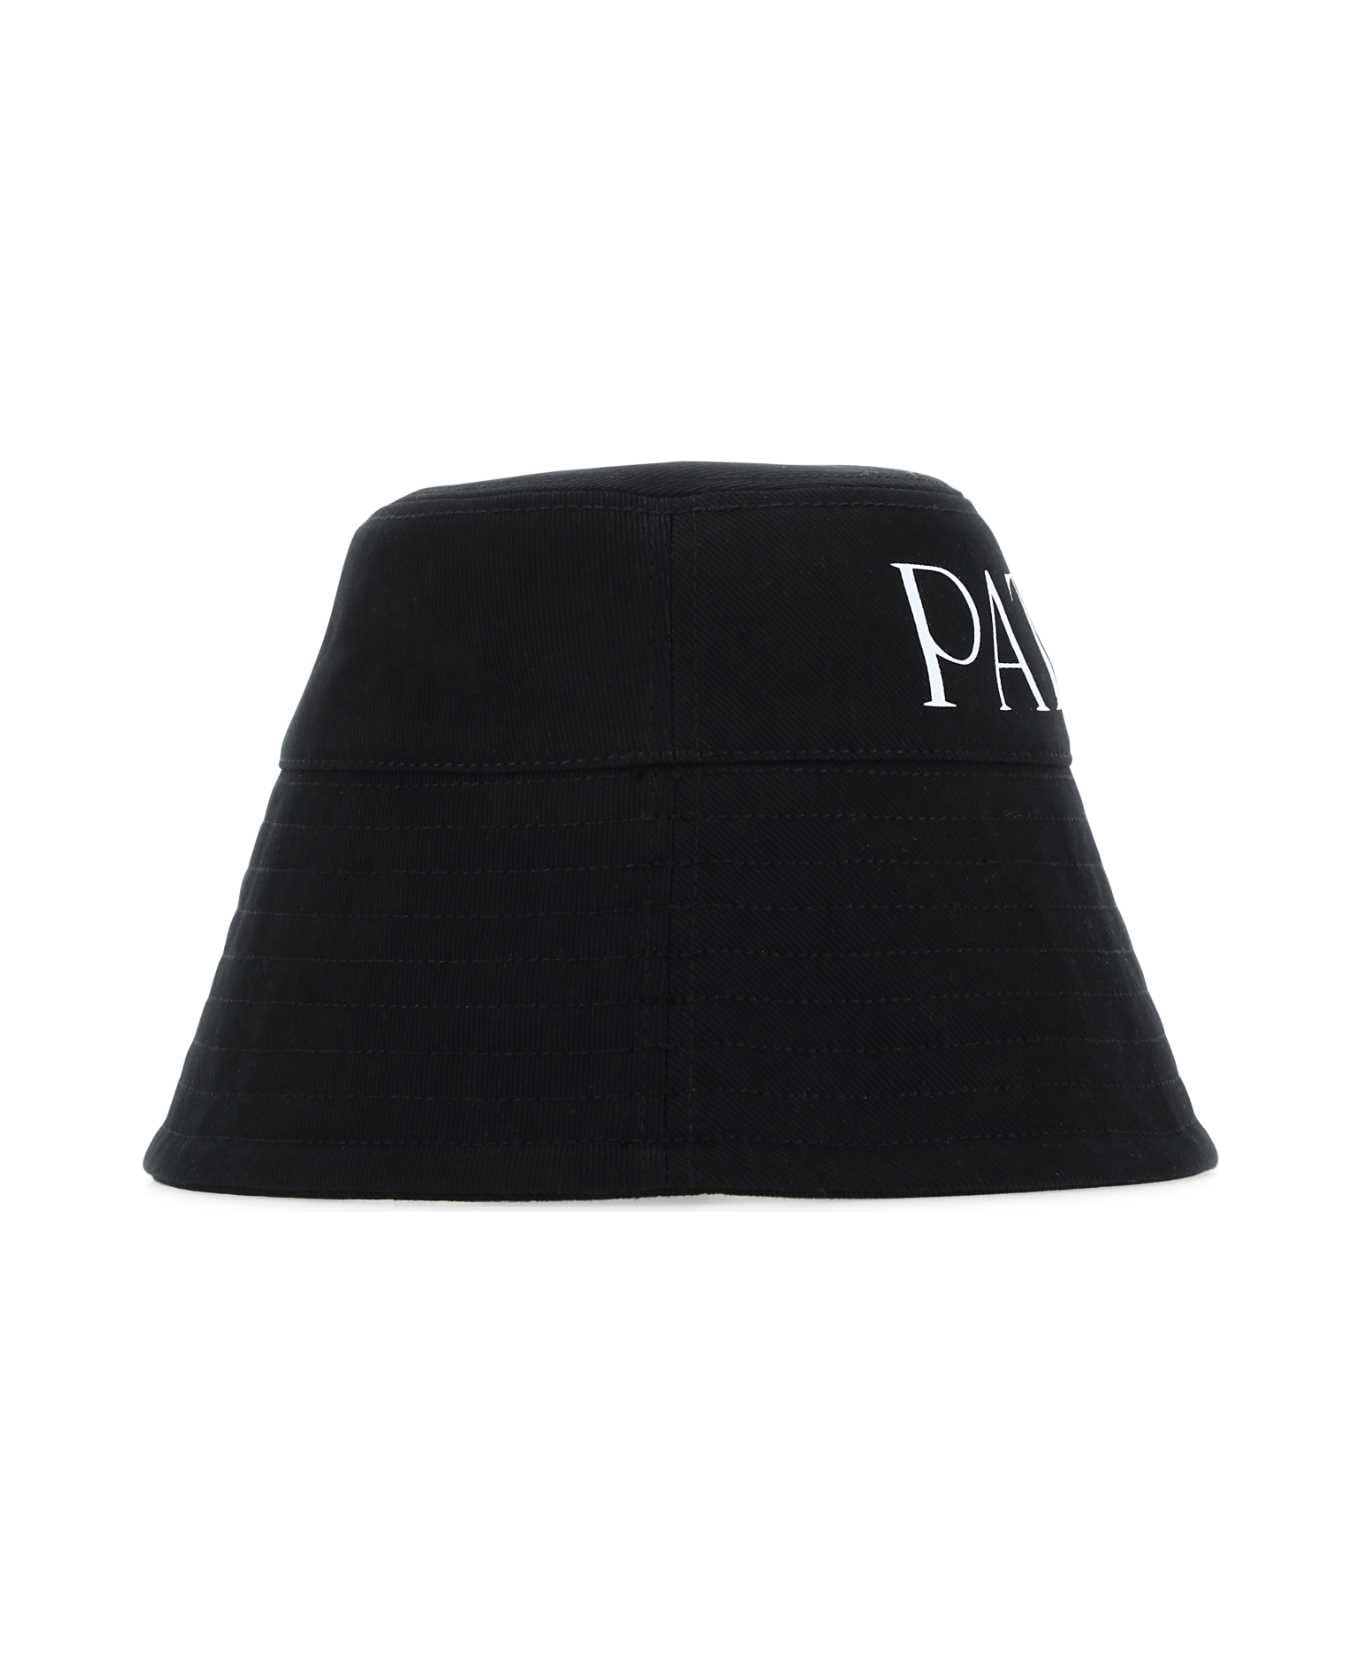 Patou Black Canvas Hat - 999B ヘアアクセサリー